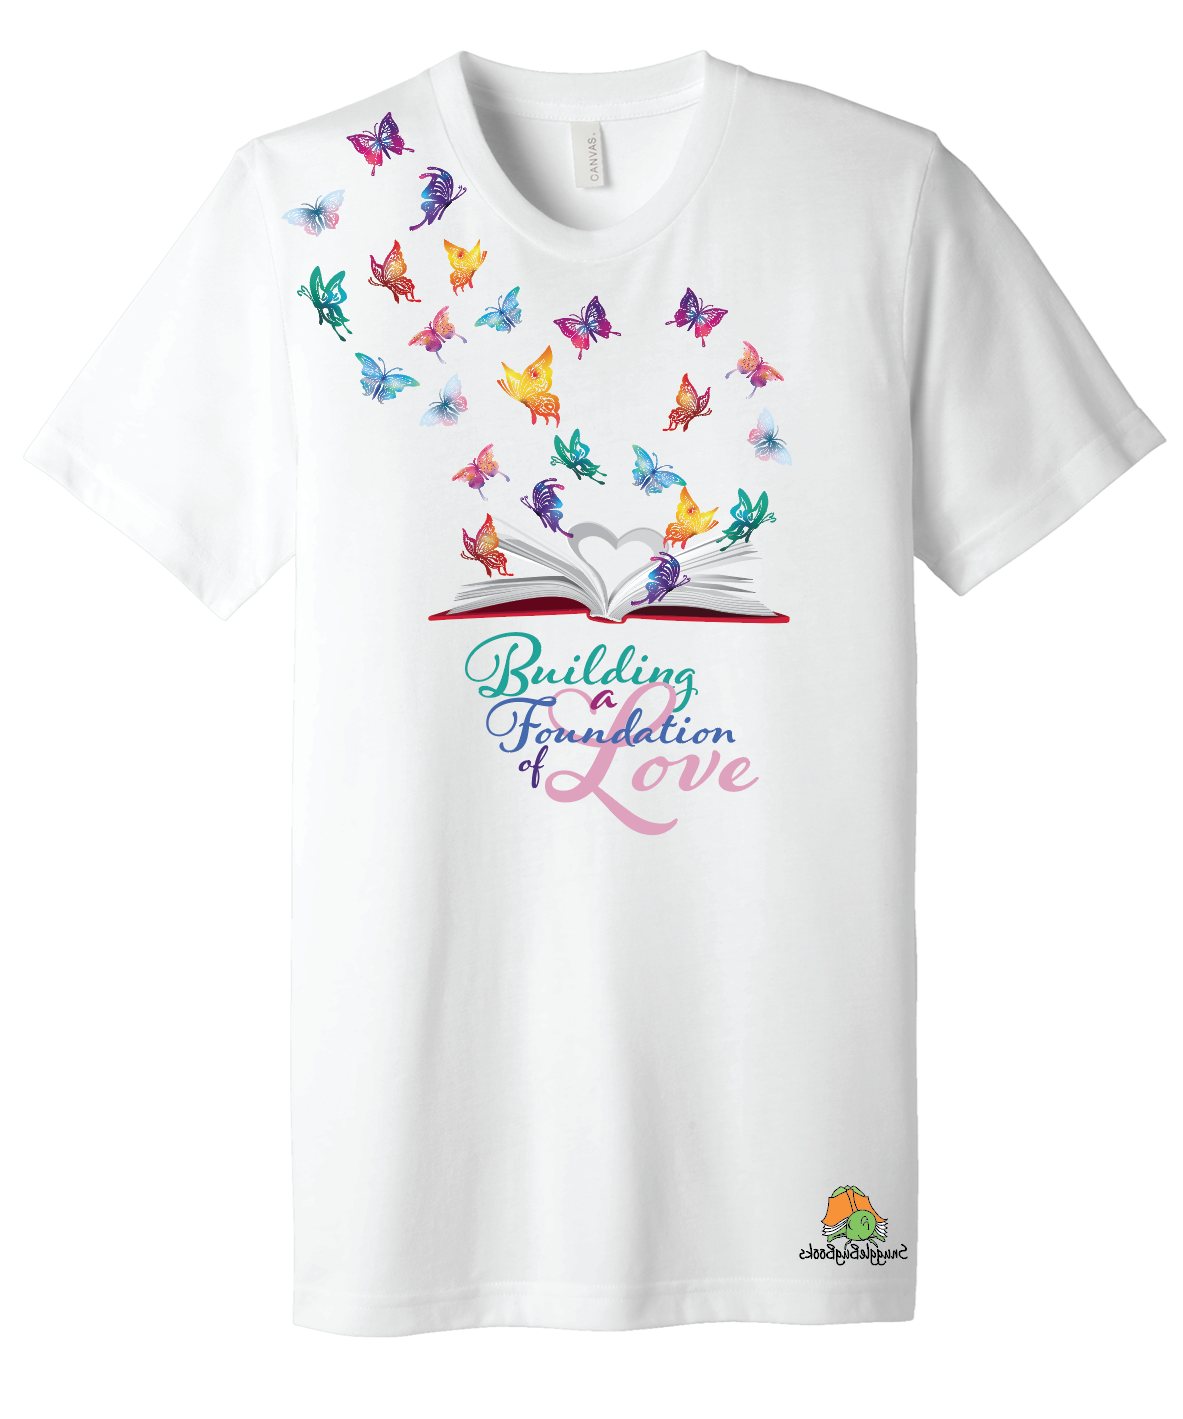 Building a Foundation of Love - Snuggle Bug Books Tri-Blend T-Shirt